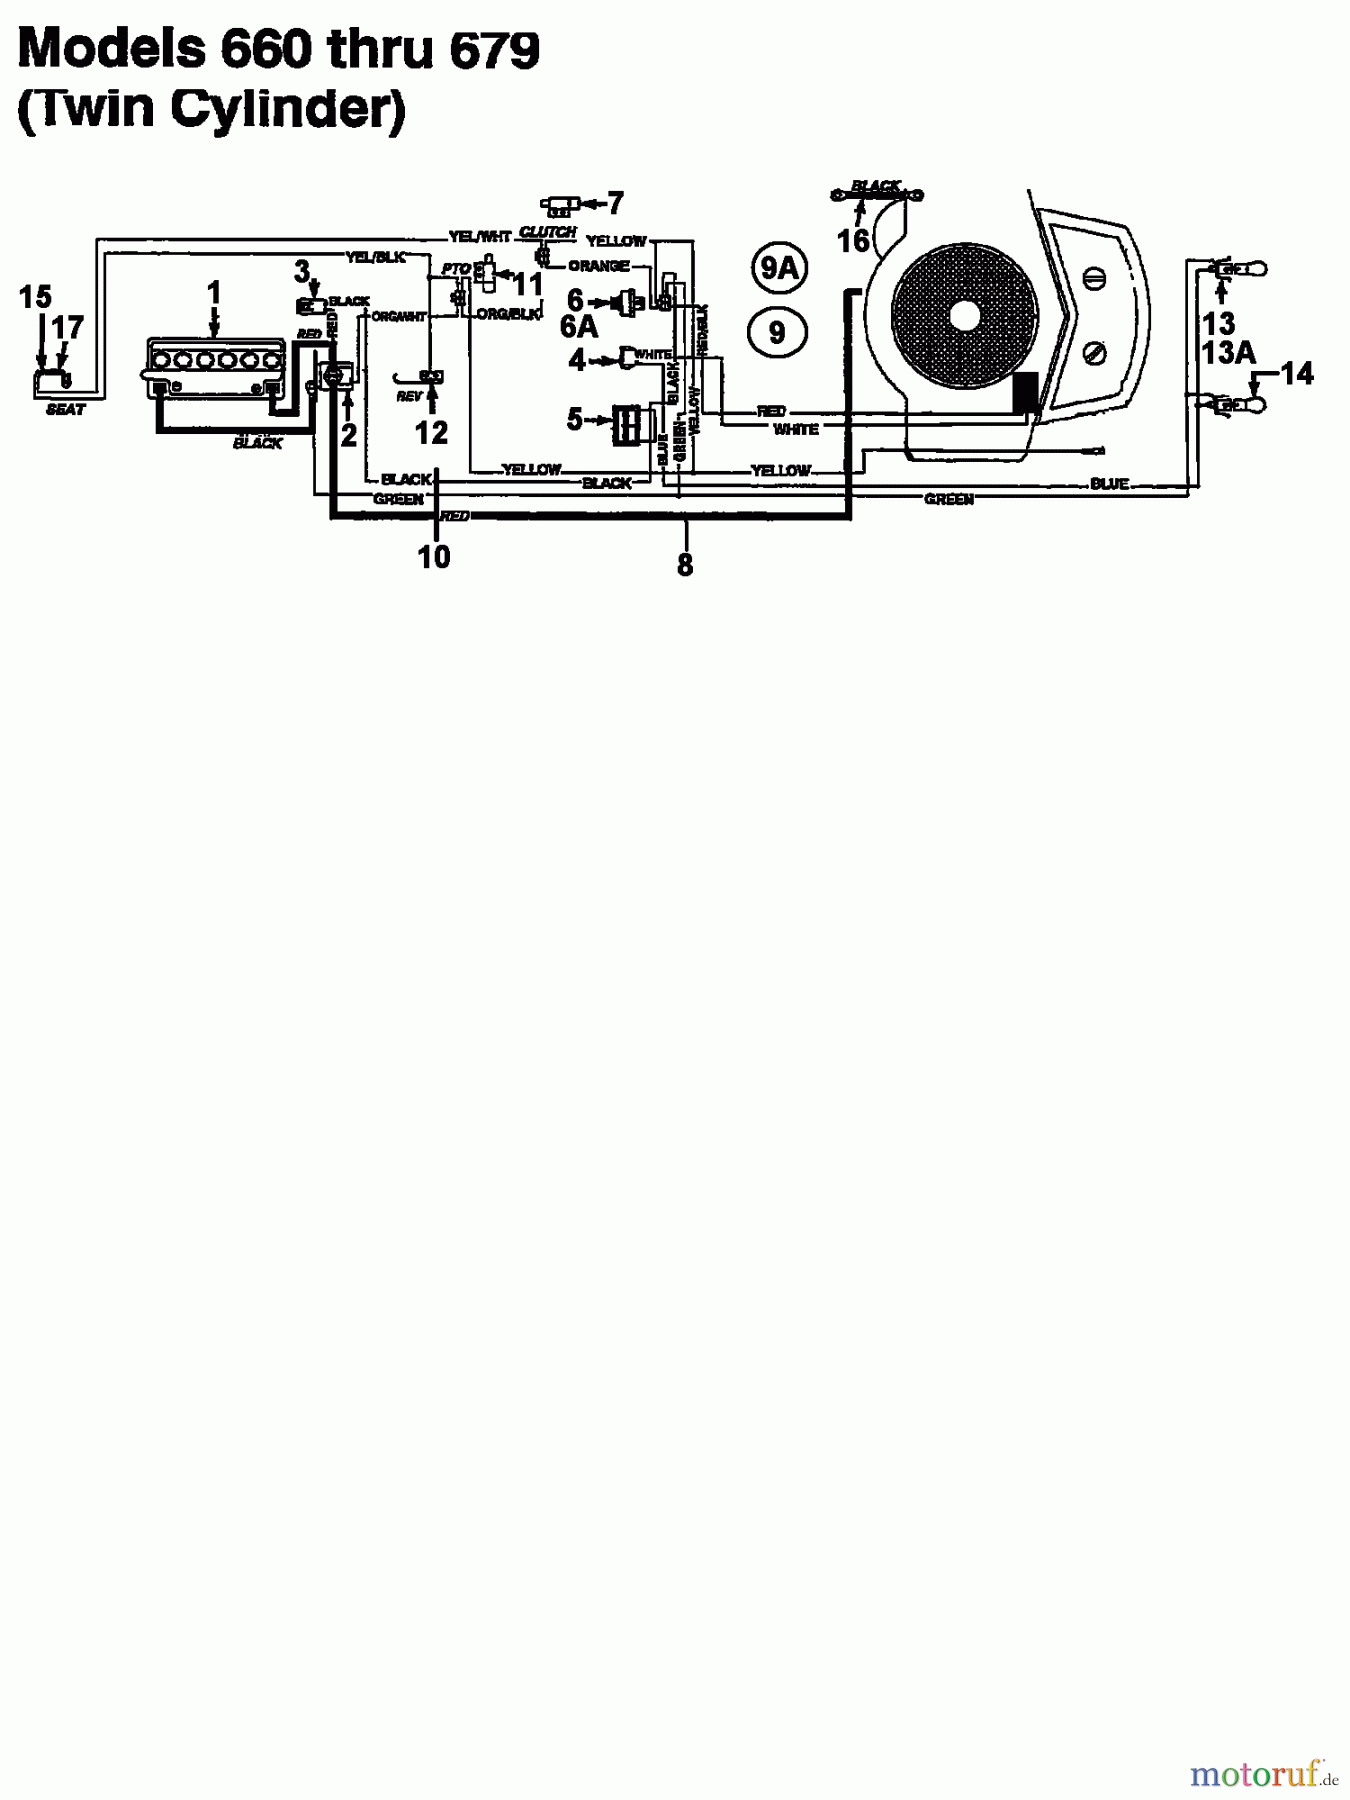  Columbia Lawn tractors 112/960 N 133K670F626  (1993) Wiring diagram twin cylinder